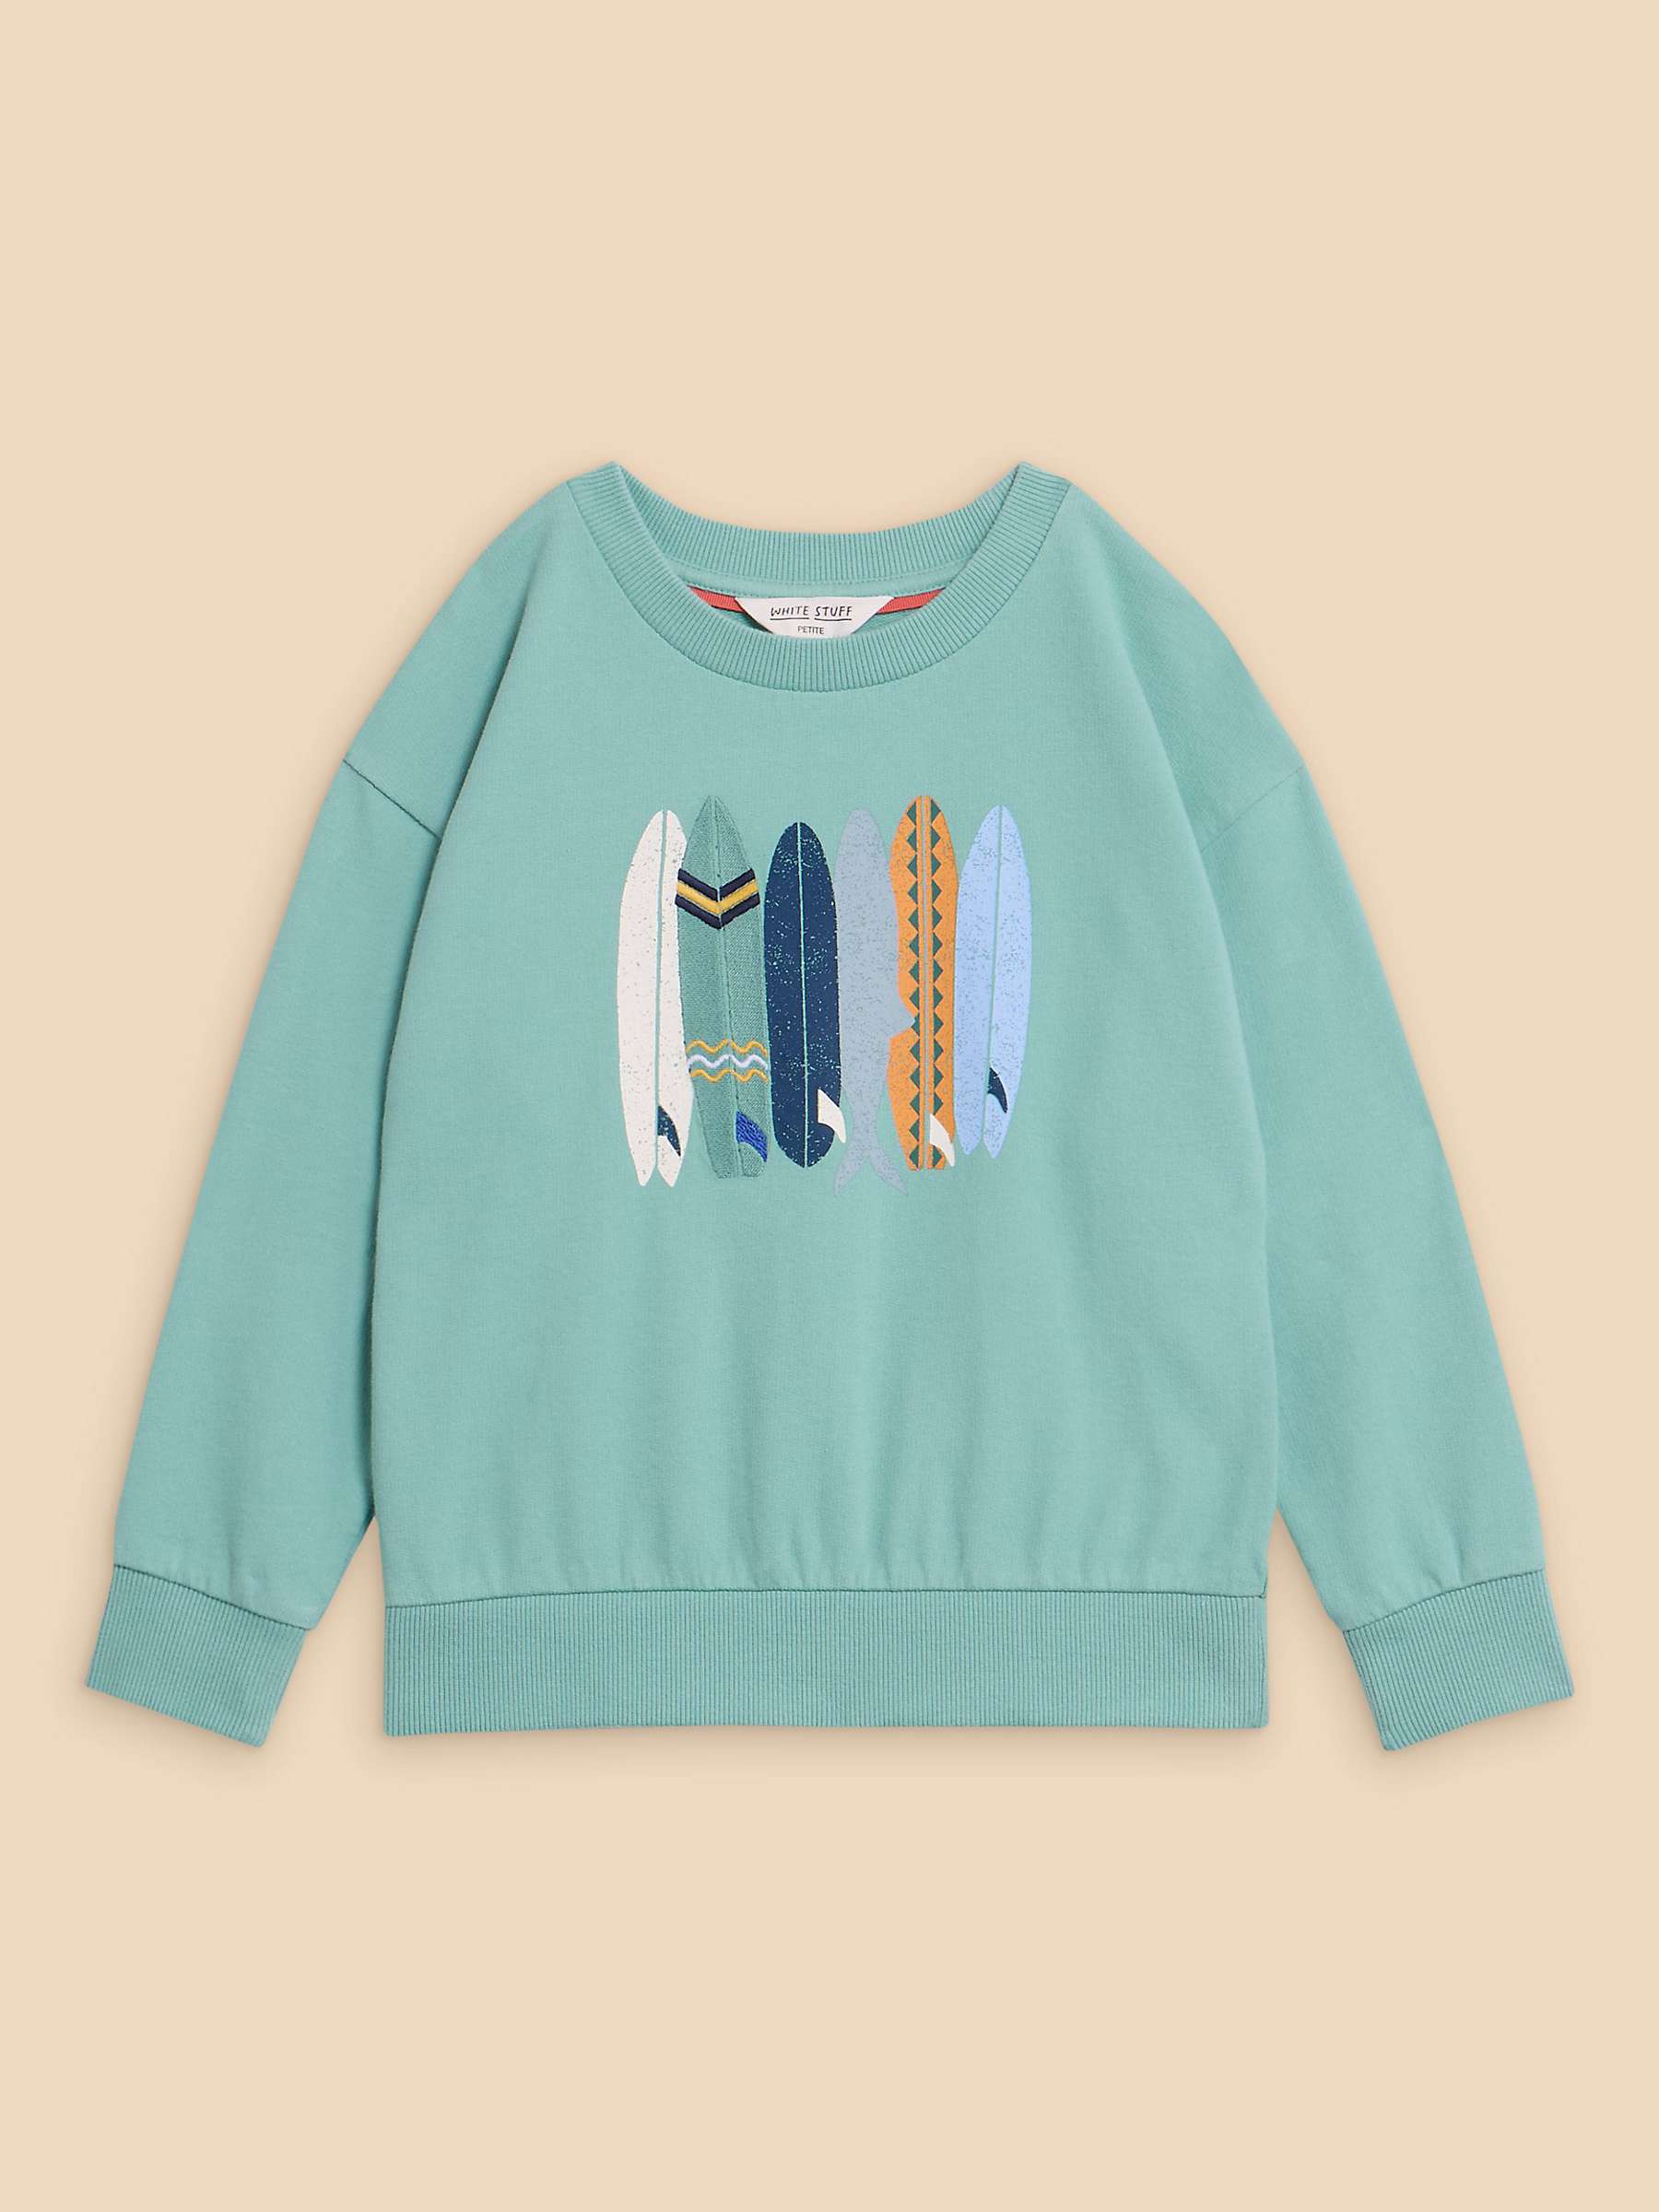 Buy White Stuff Kids' Fish Surfboard Graphic Sweatshirt, Mint Green/Multi Online at johnlewis.com